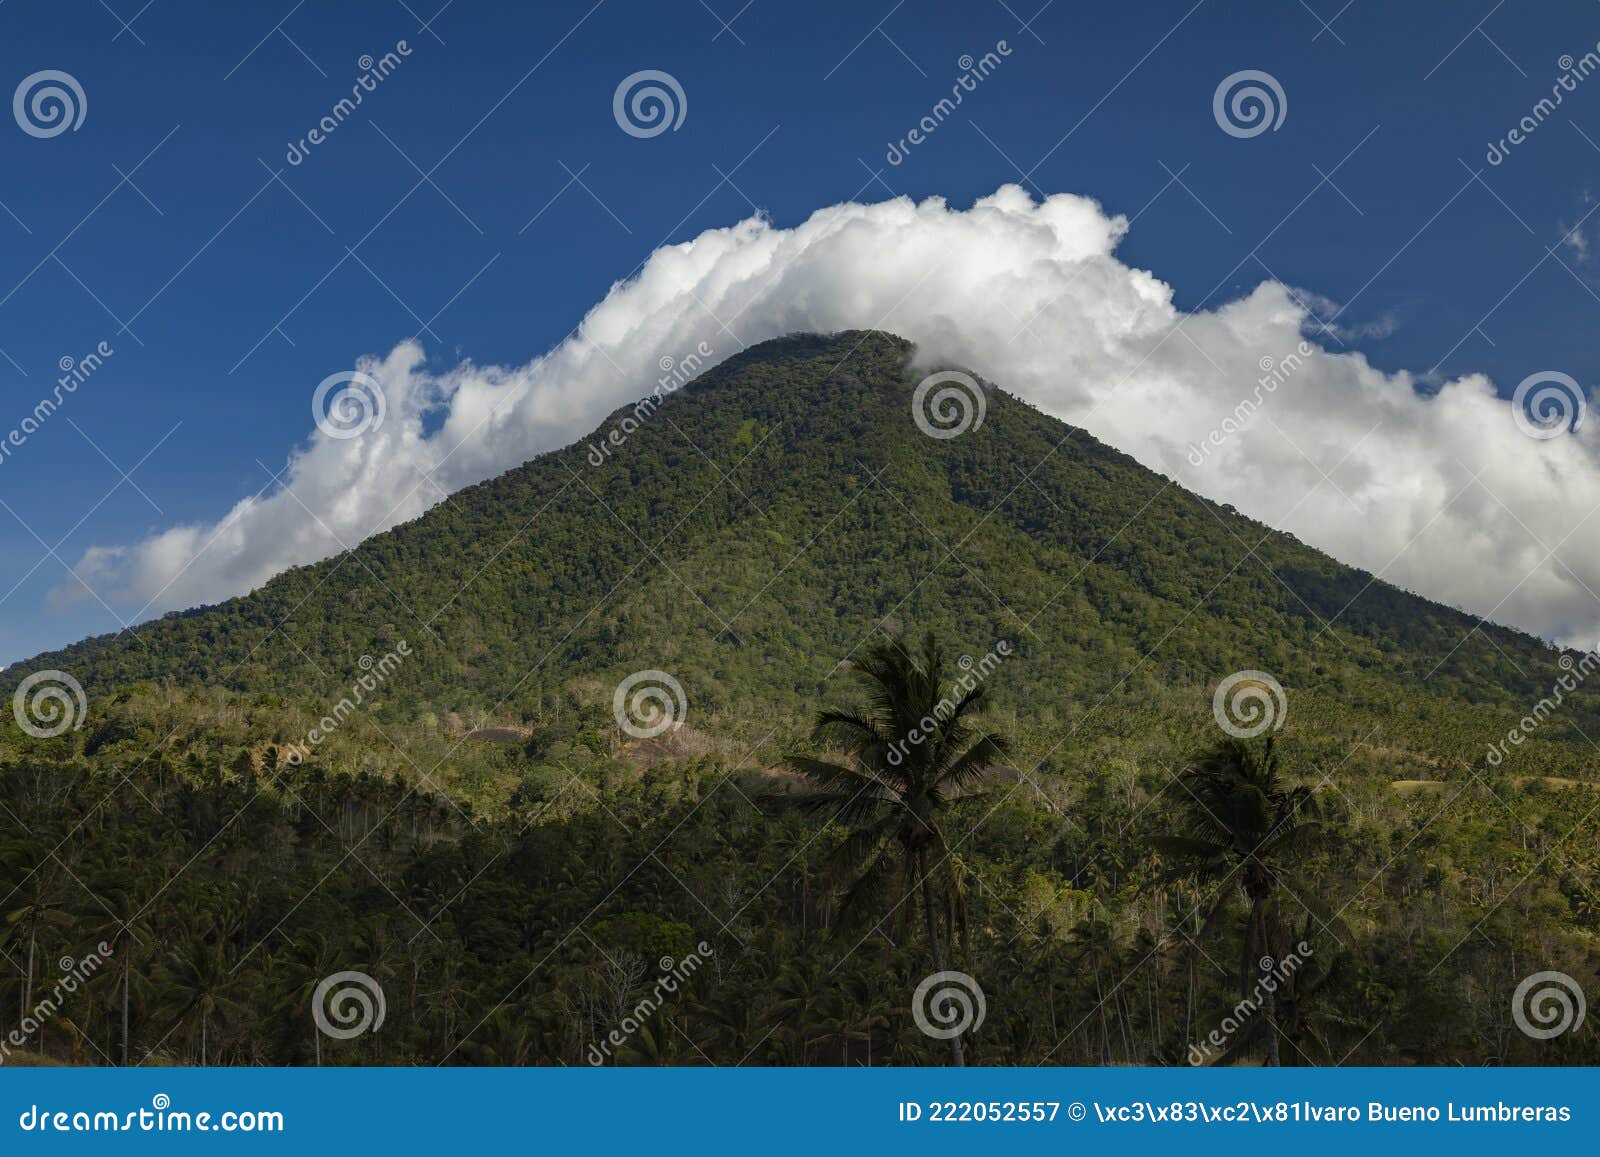 mount tangkoko stratovolcano and rainforest, indonesia